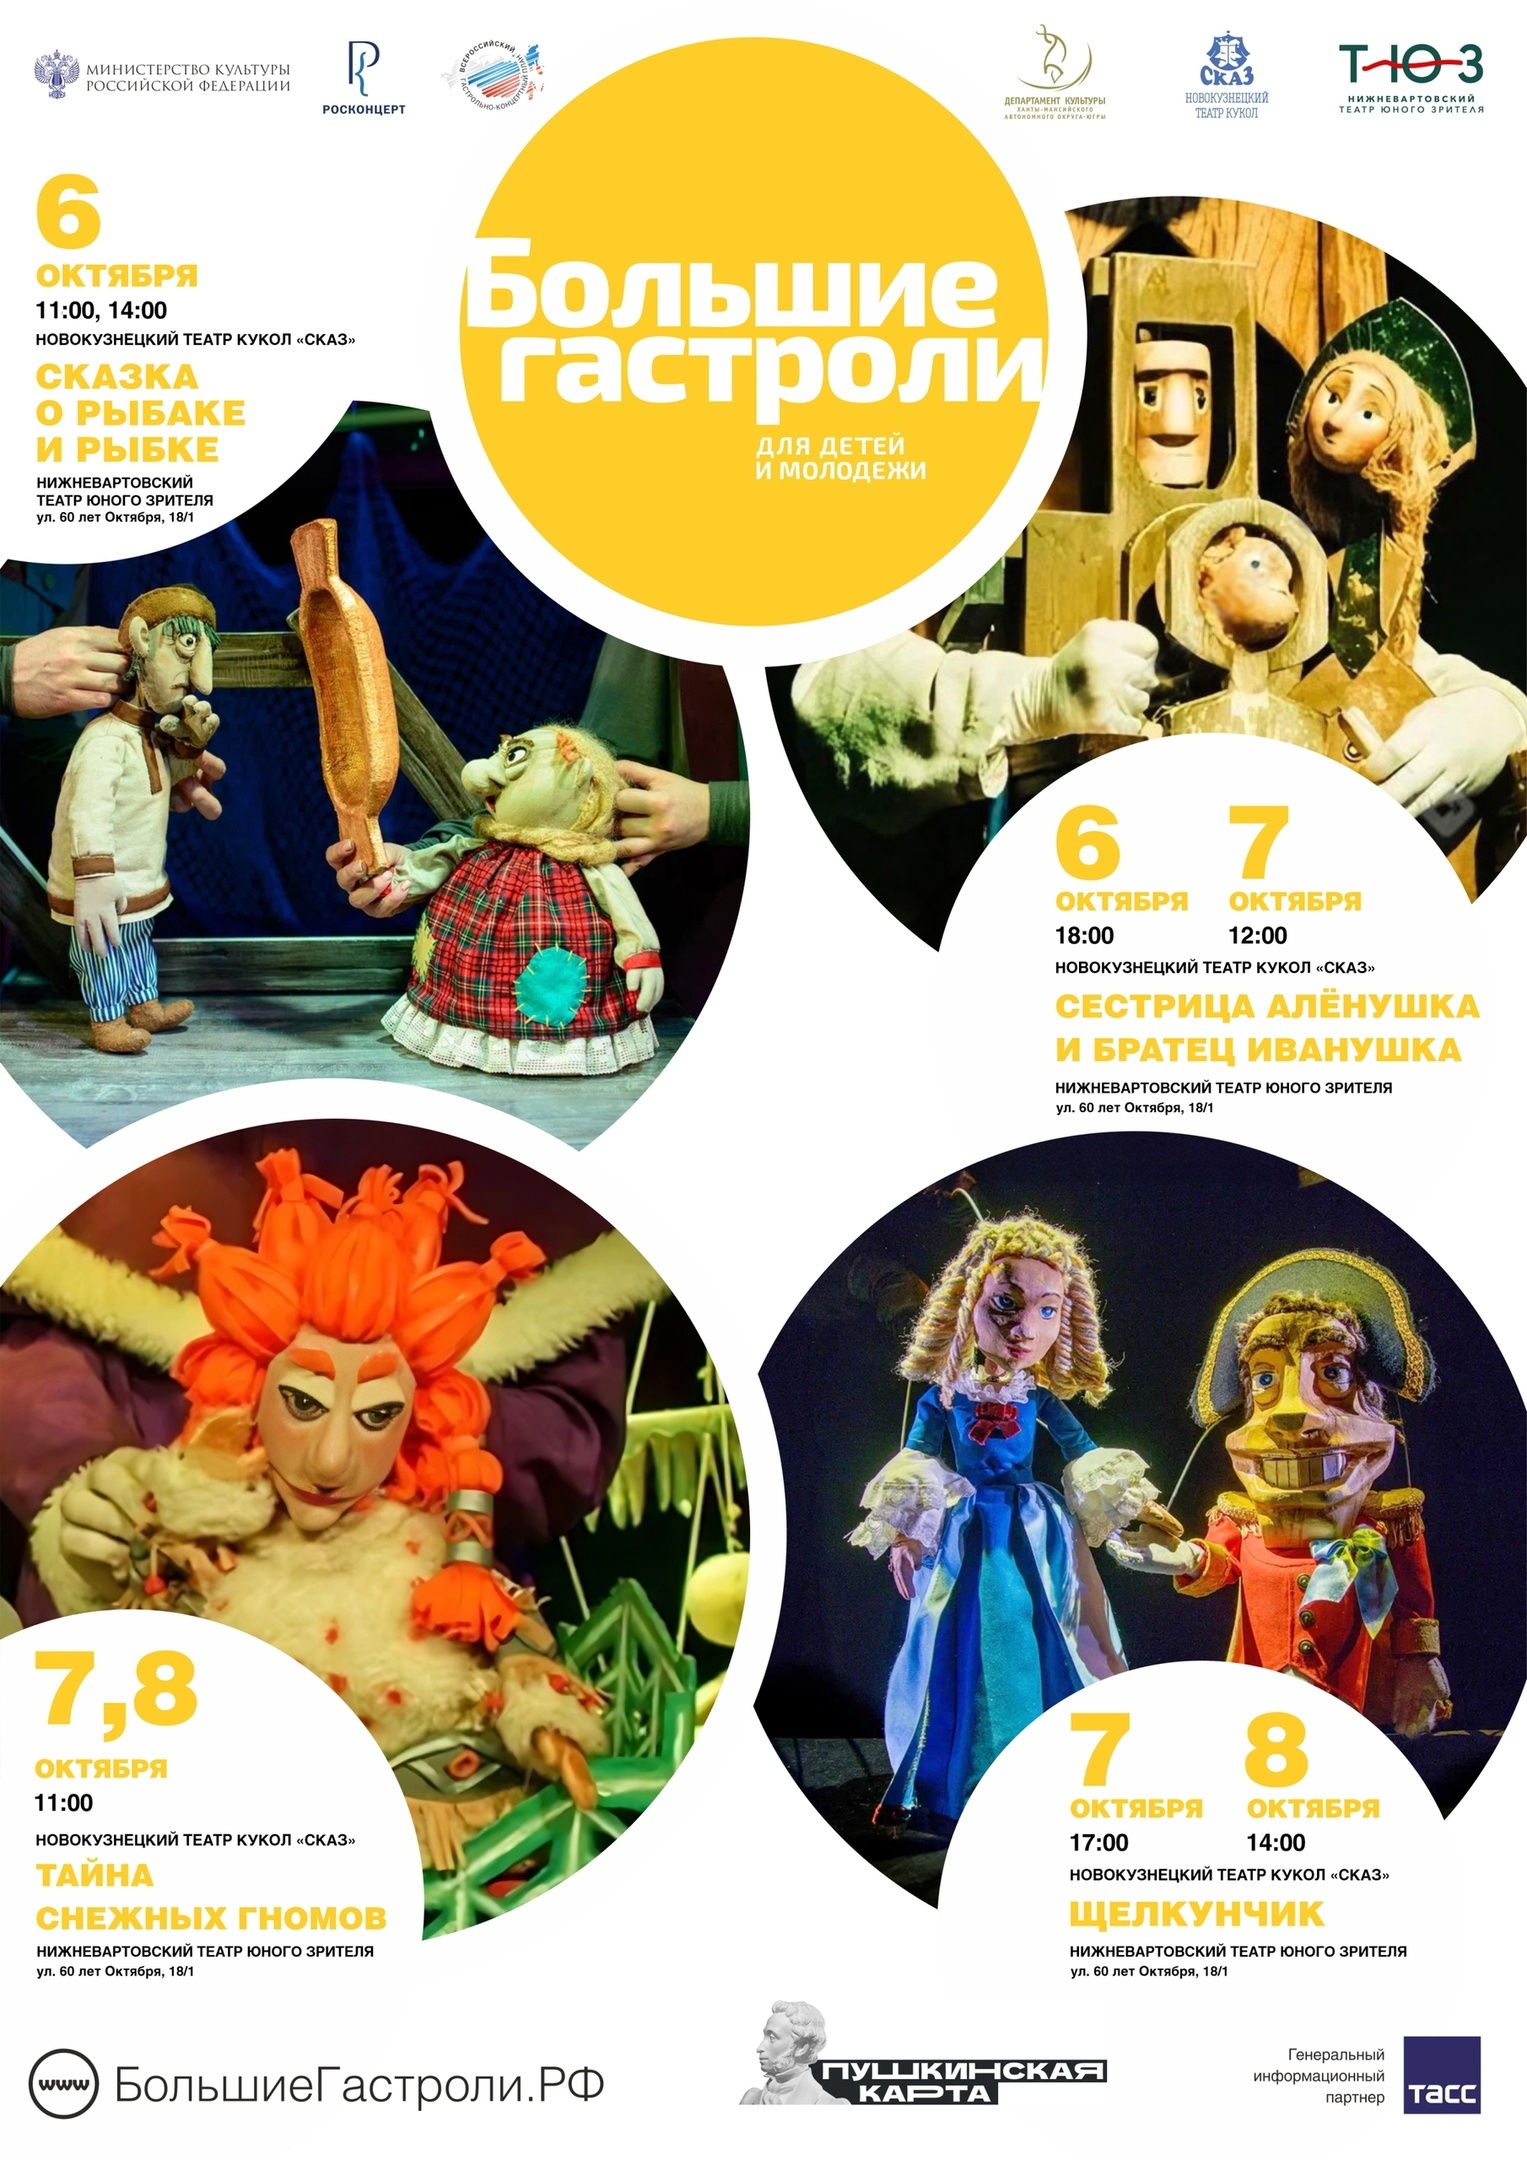 Вартовчане познакомятся с Новокузнецким театром кукол «Сказ»